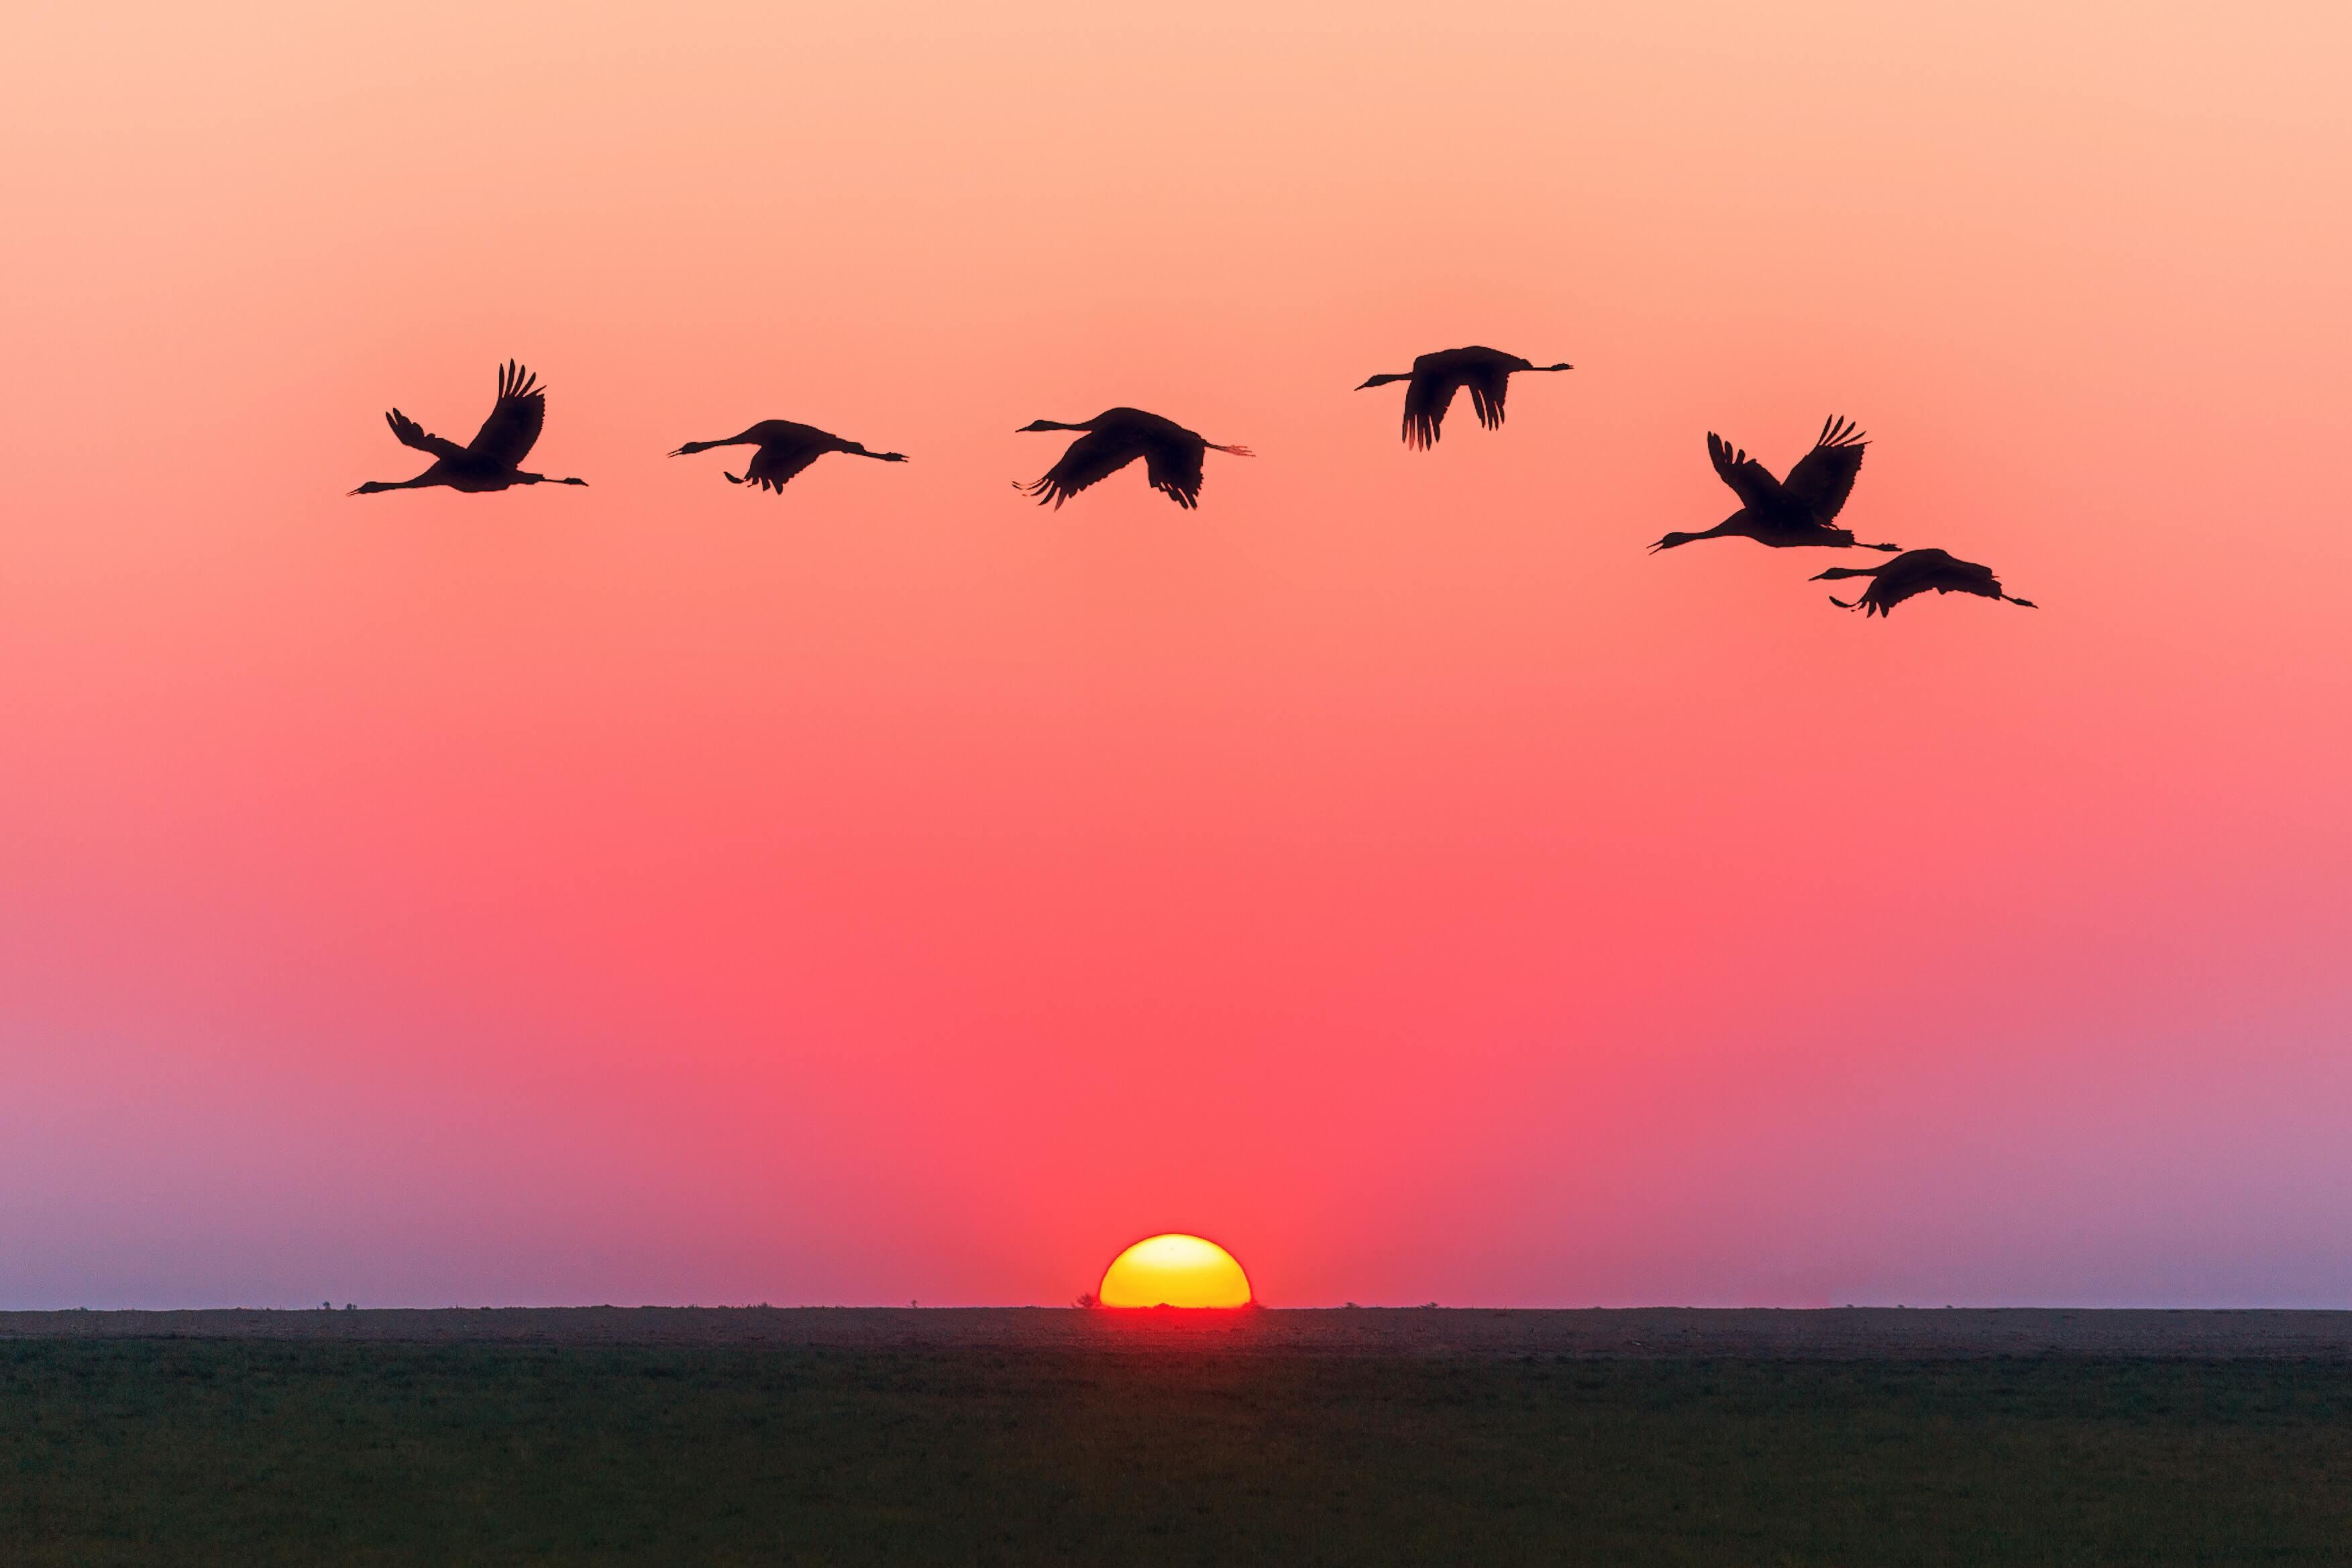 Sunrise with flying ducks